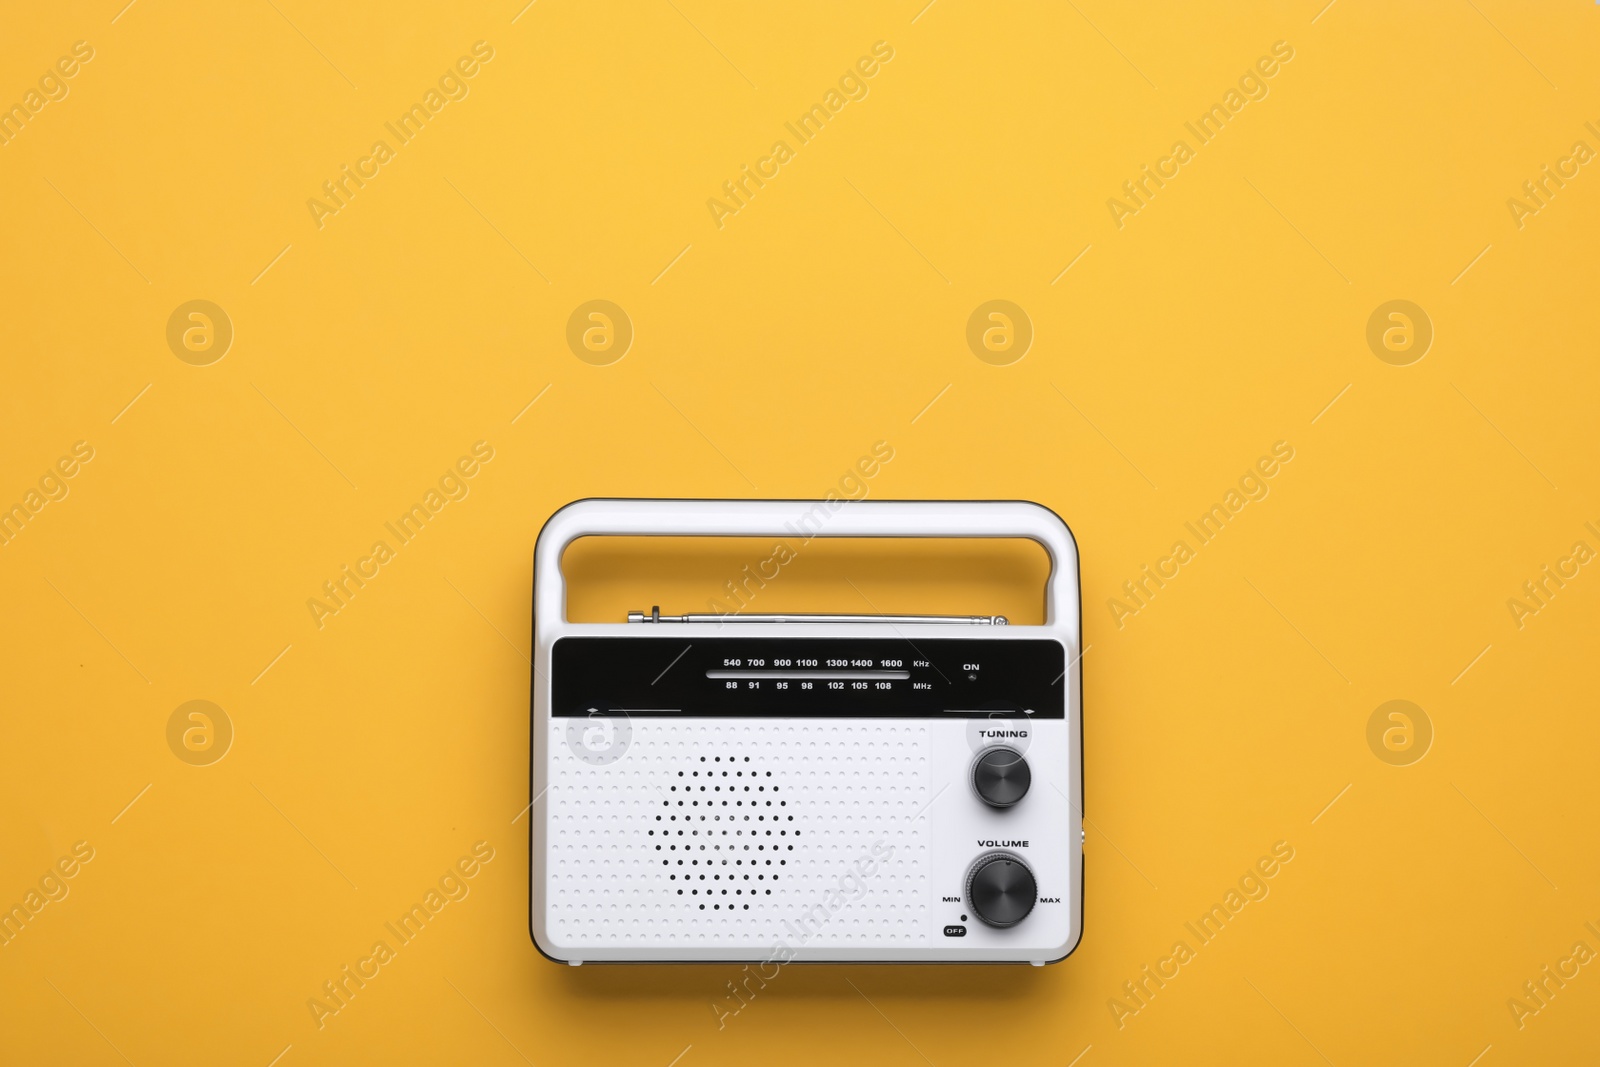 Photo of Retro radio receiver on yellow background, top view